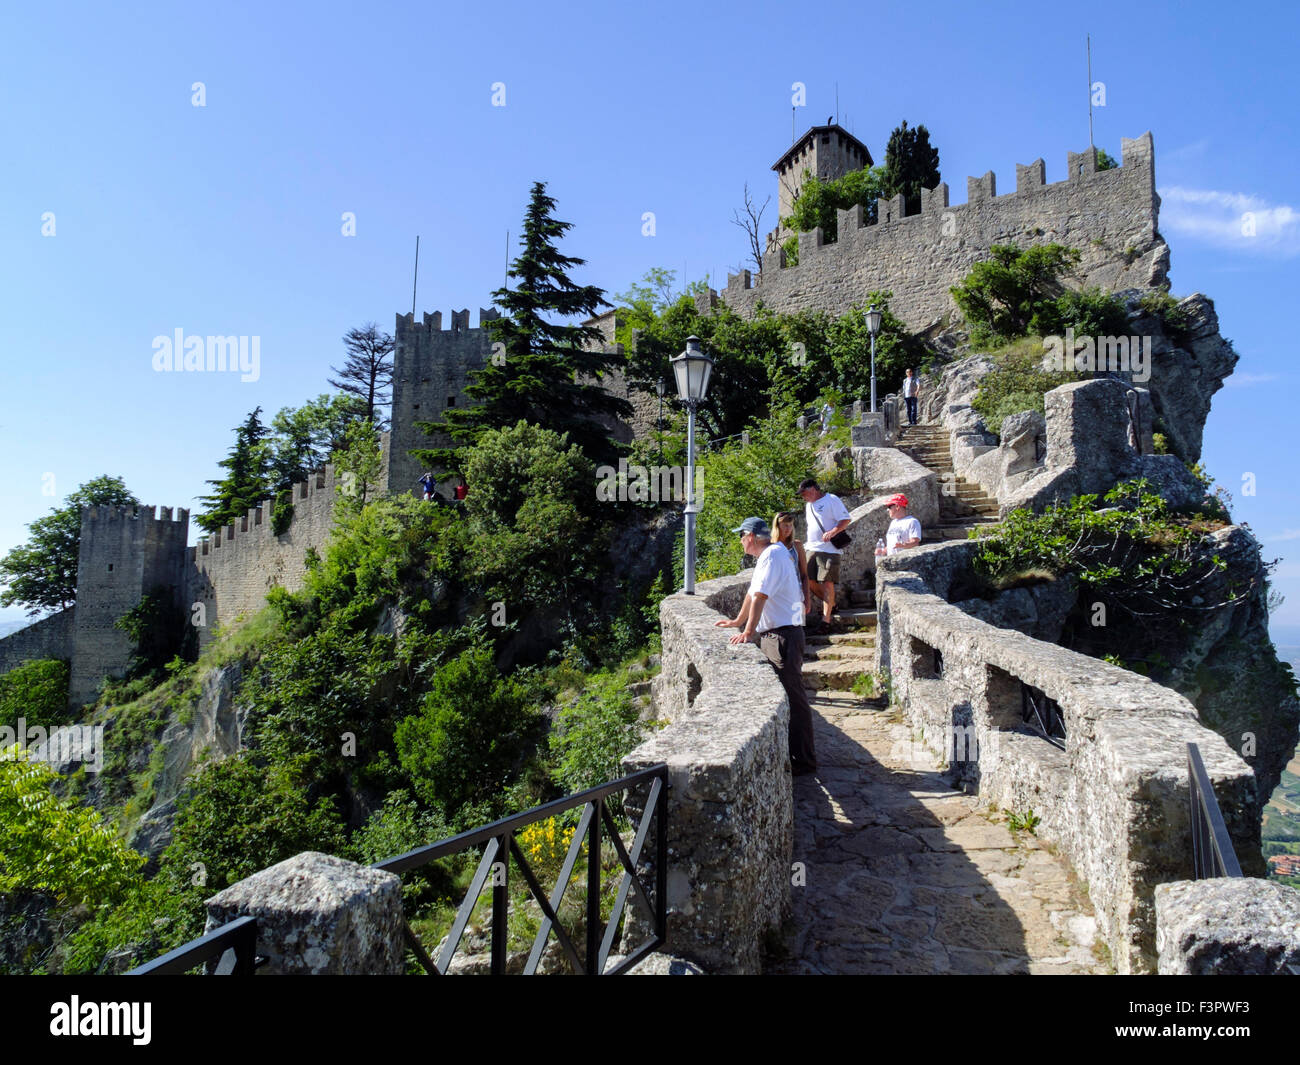 Italy, Emilia-Romagna, Republic of San Marino - the fortress on the craggy rock. Stock Photo